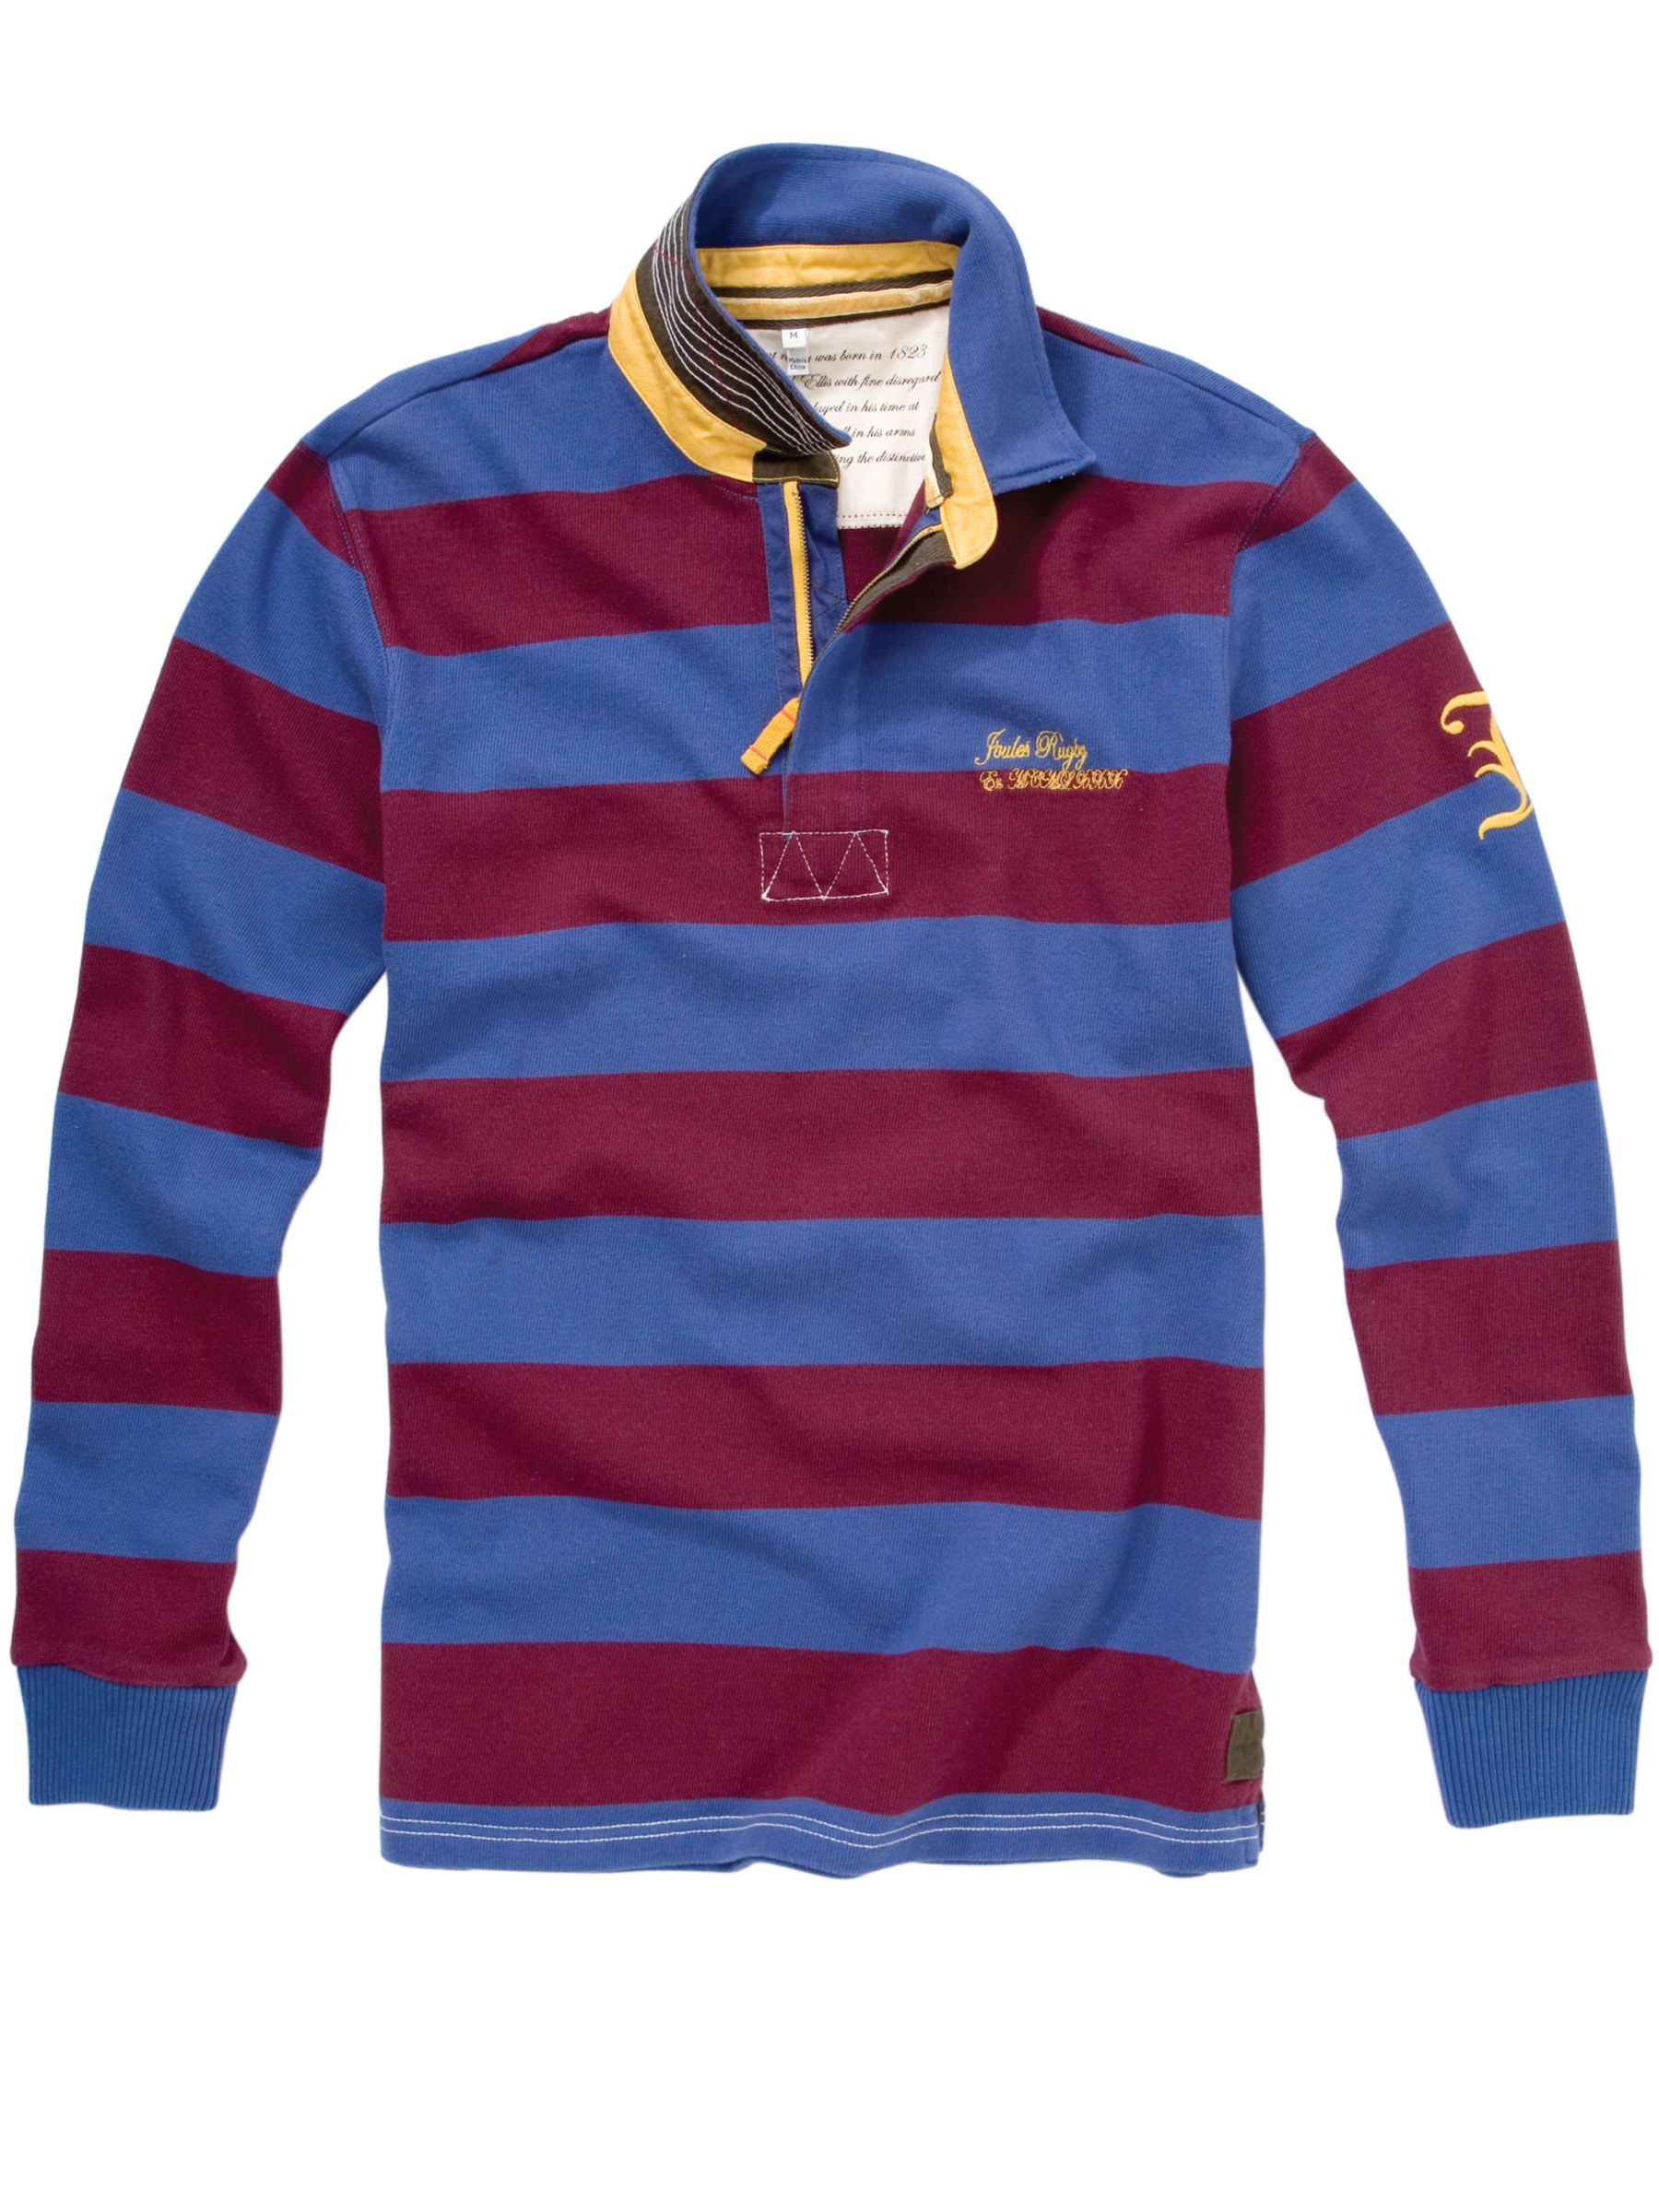 Joules Berkeley Stripe Rugby Shirt, Ink Blue